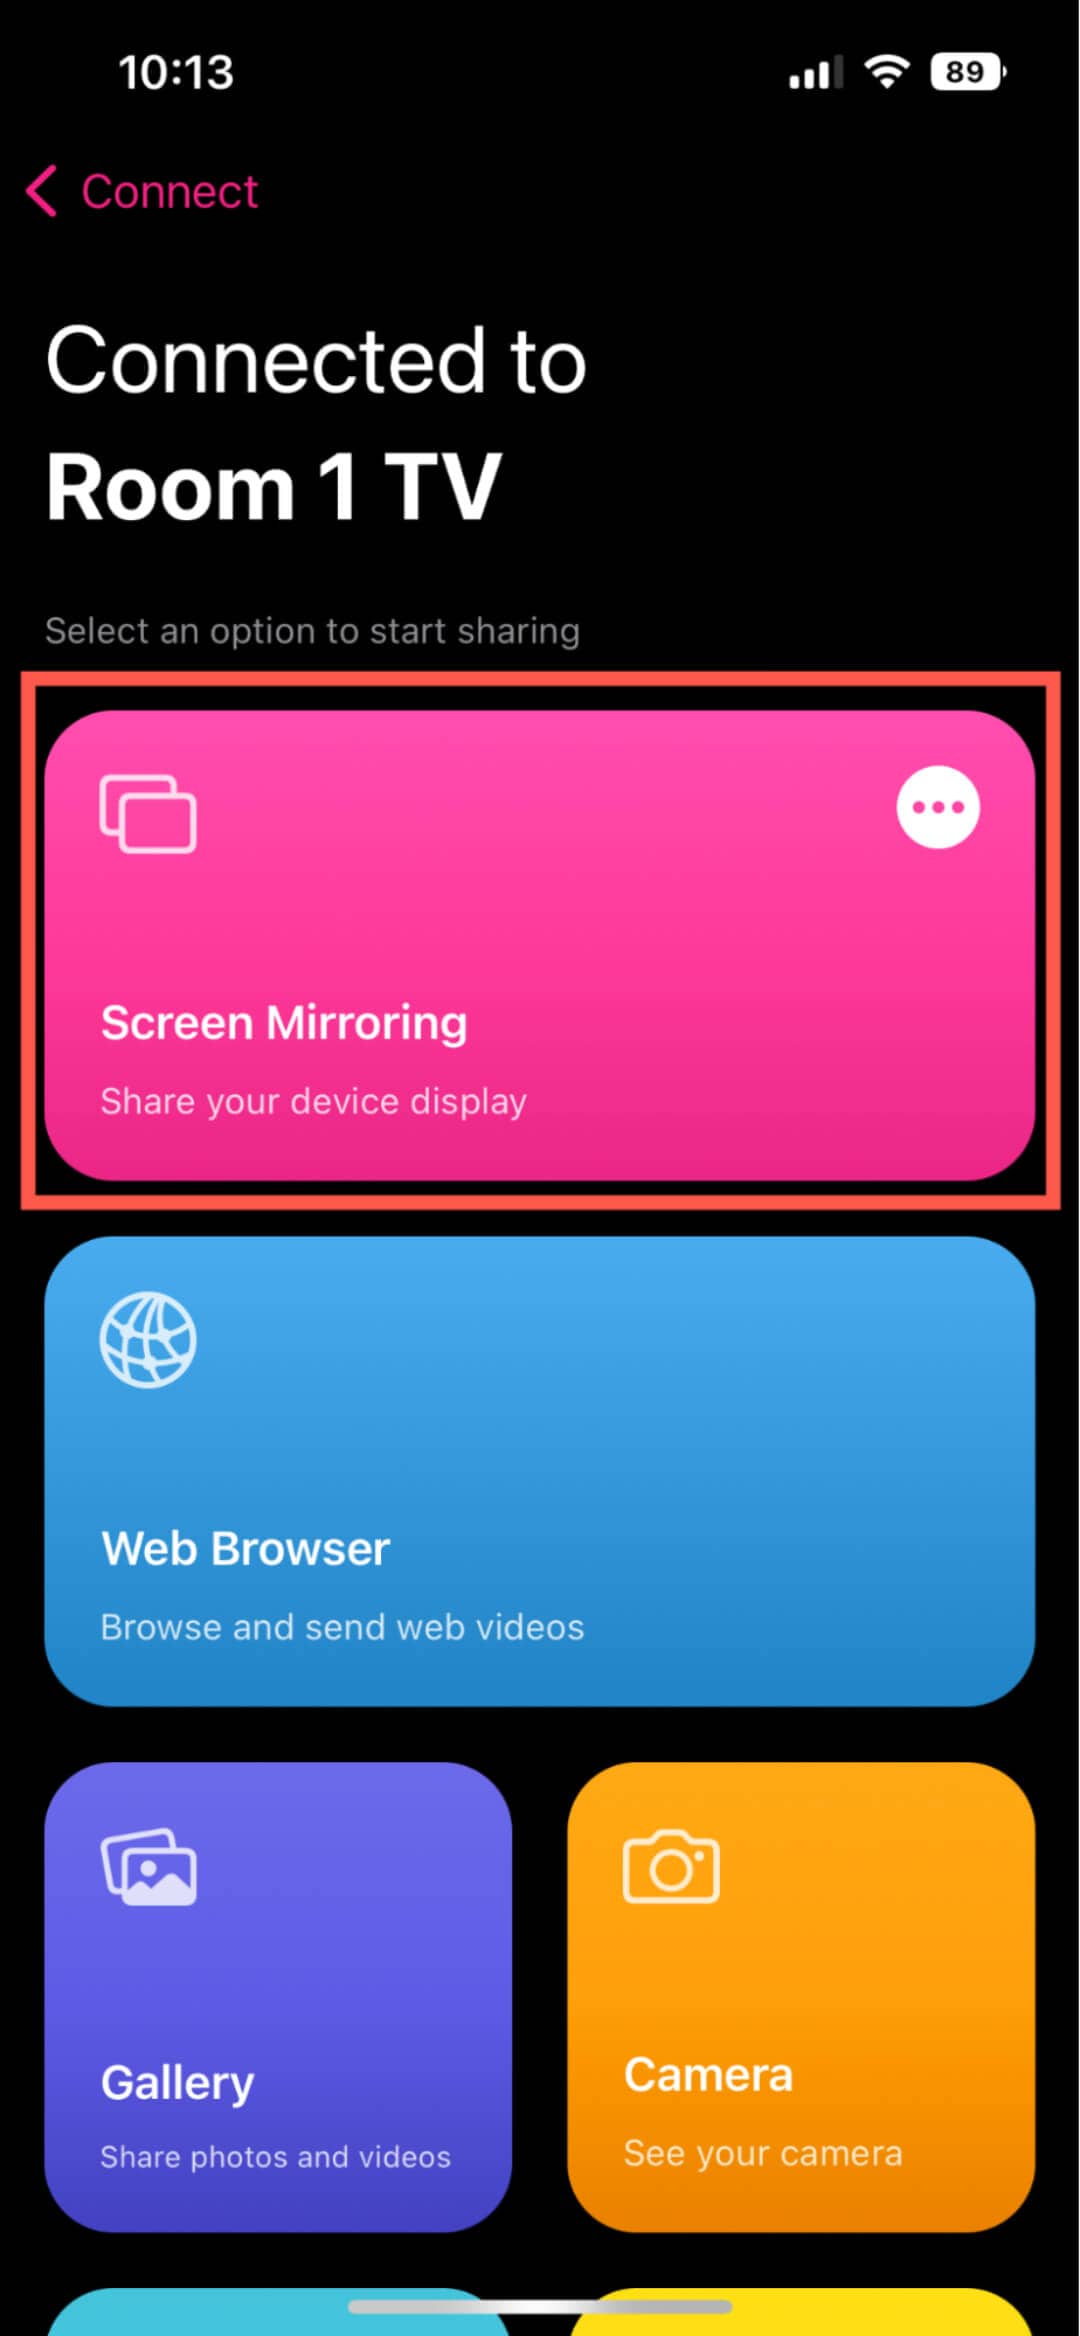 Select Screen Mirroring option